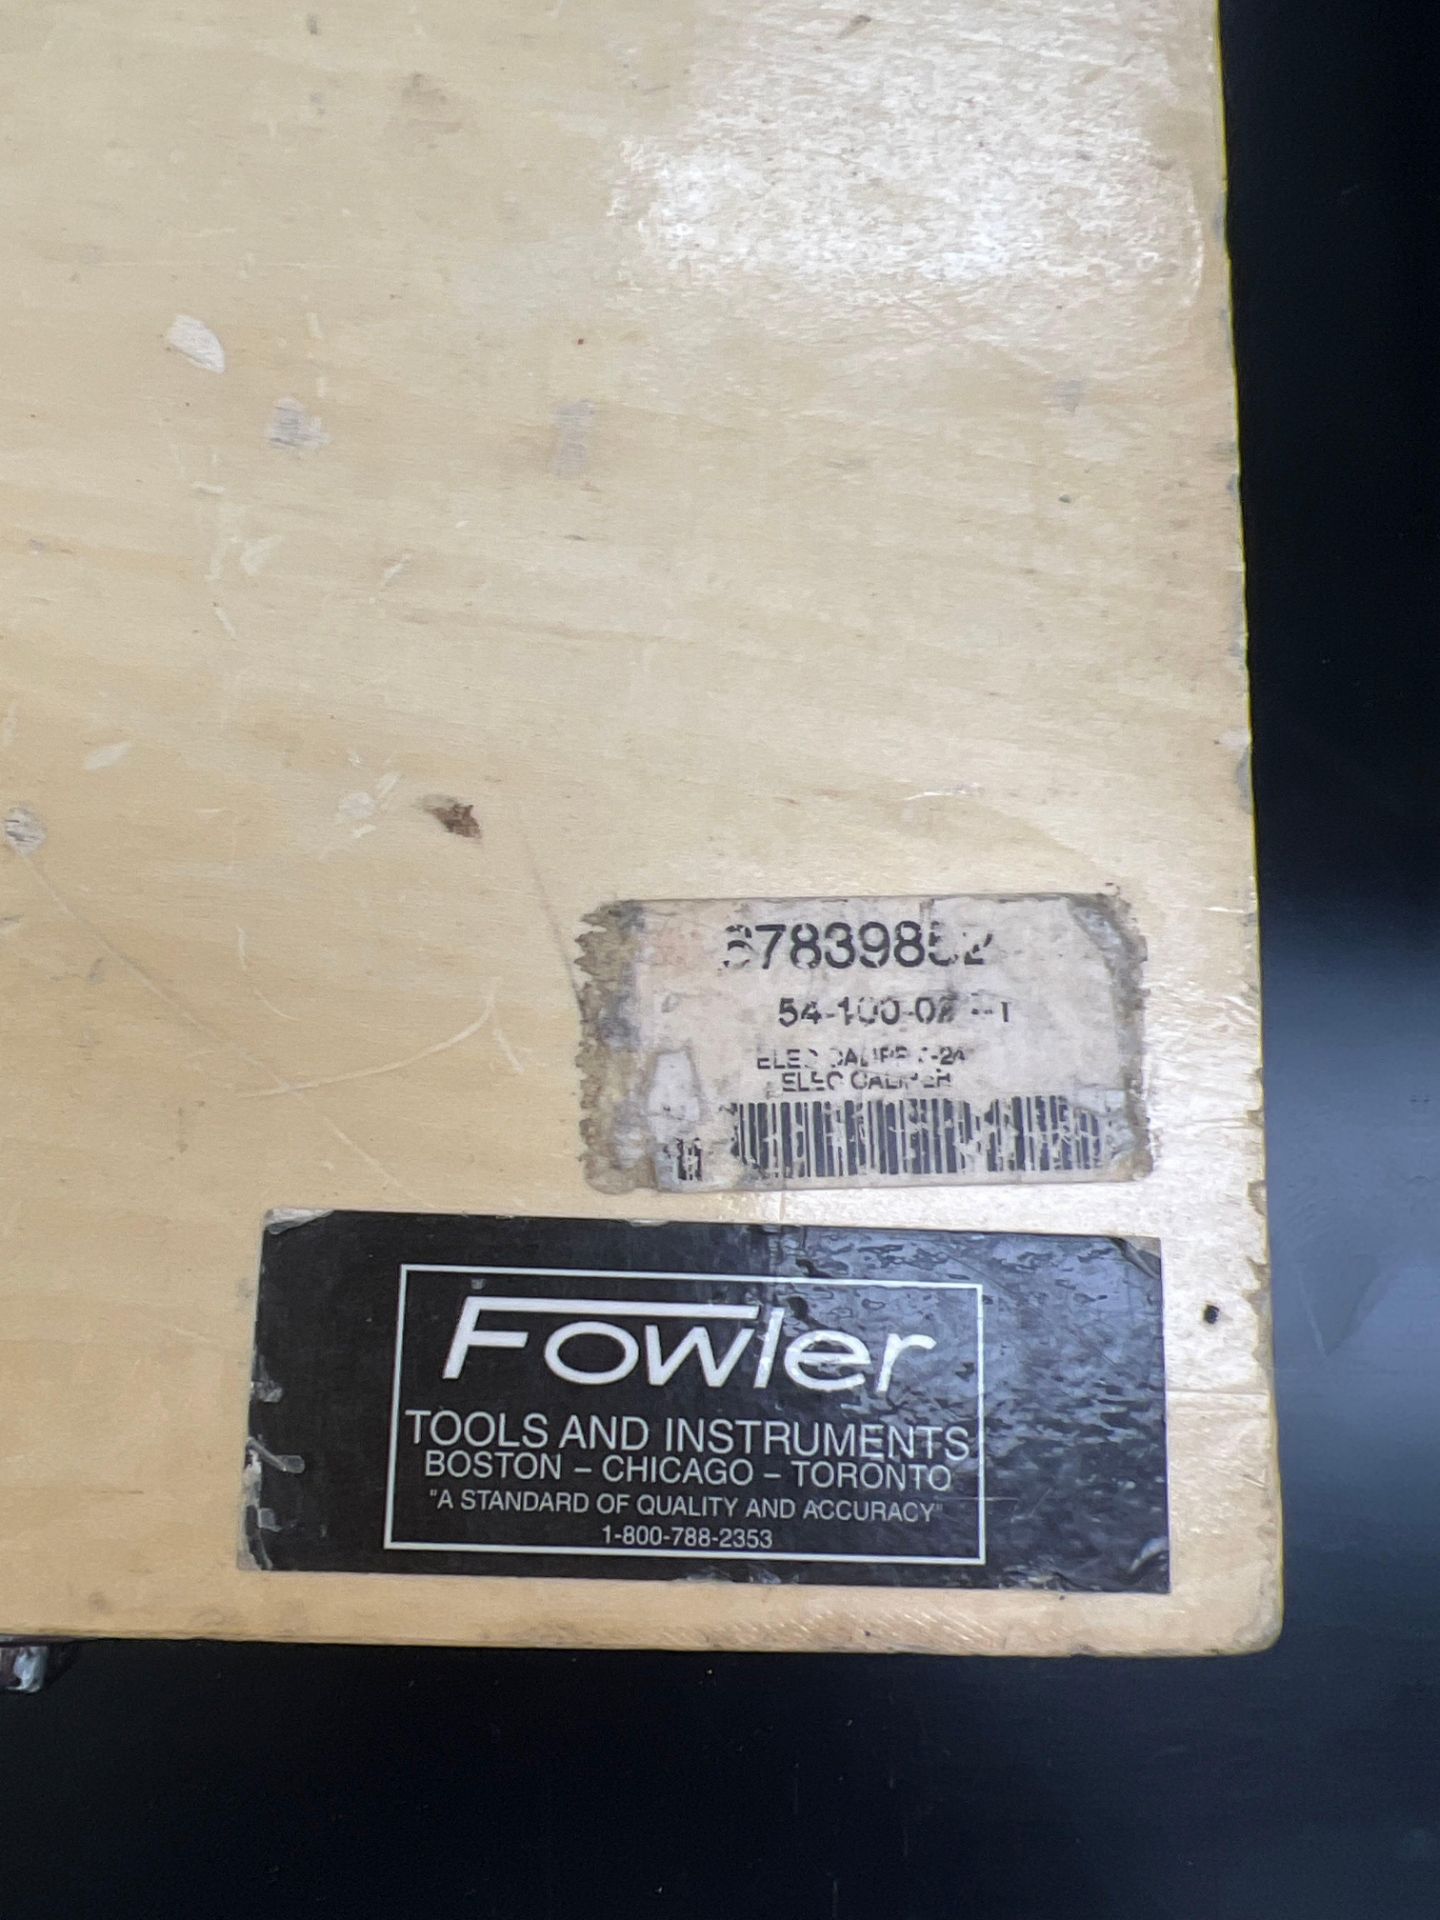 Fowler Heavy Duty Electronic Digital Caliper - Image 6 of 7